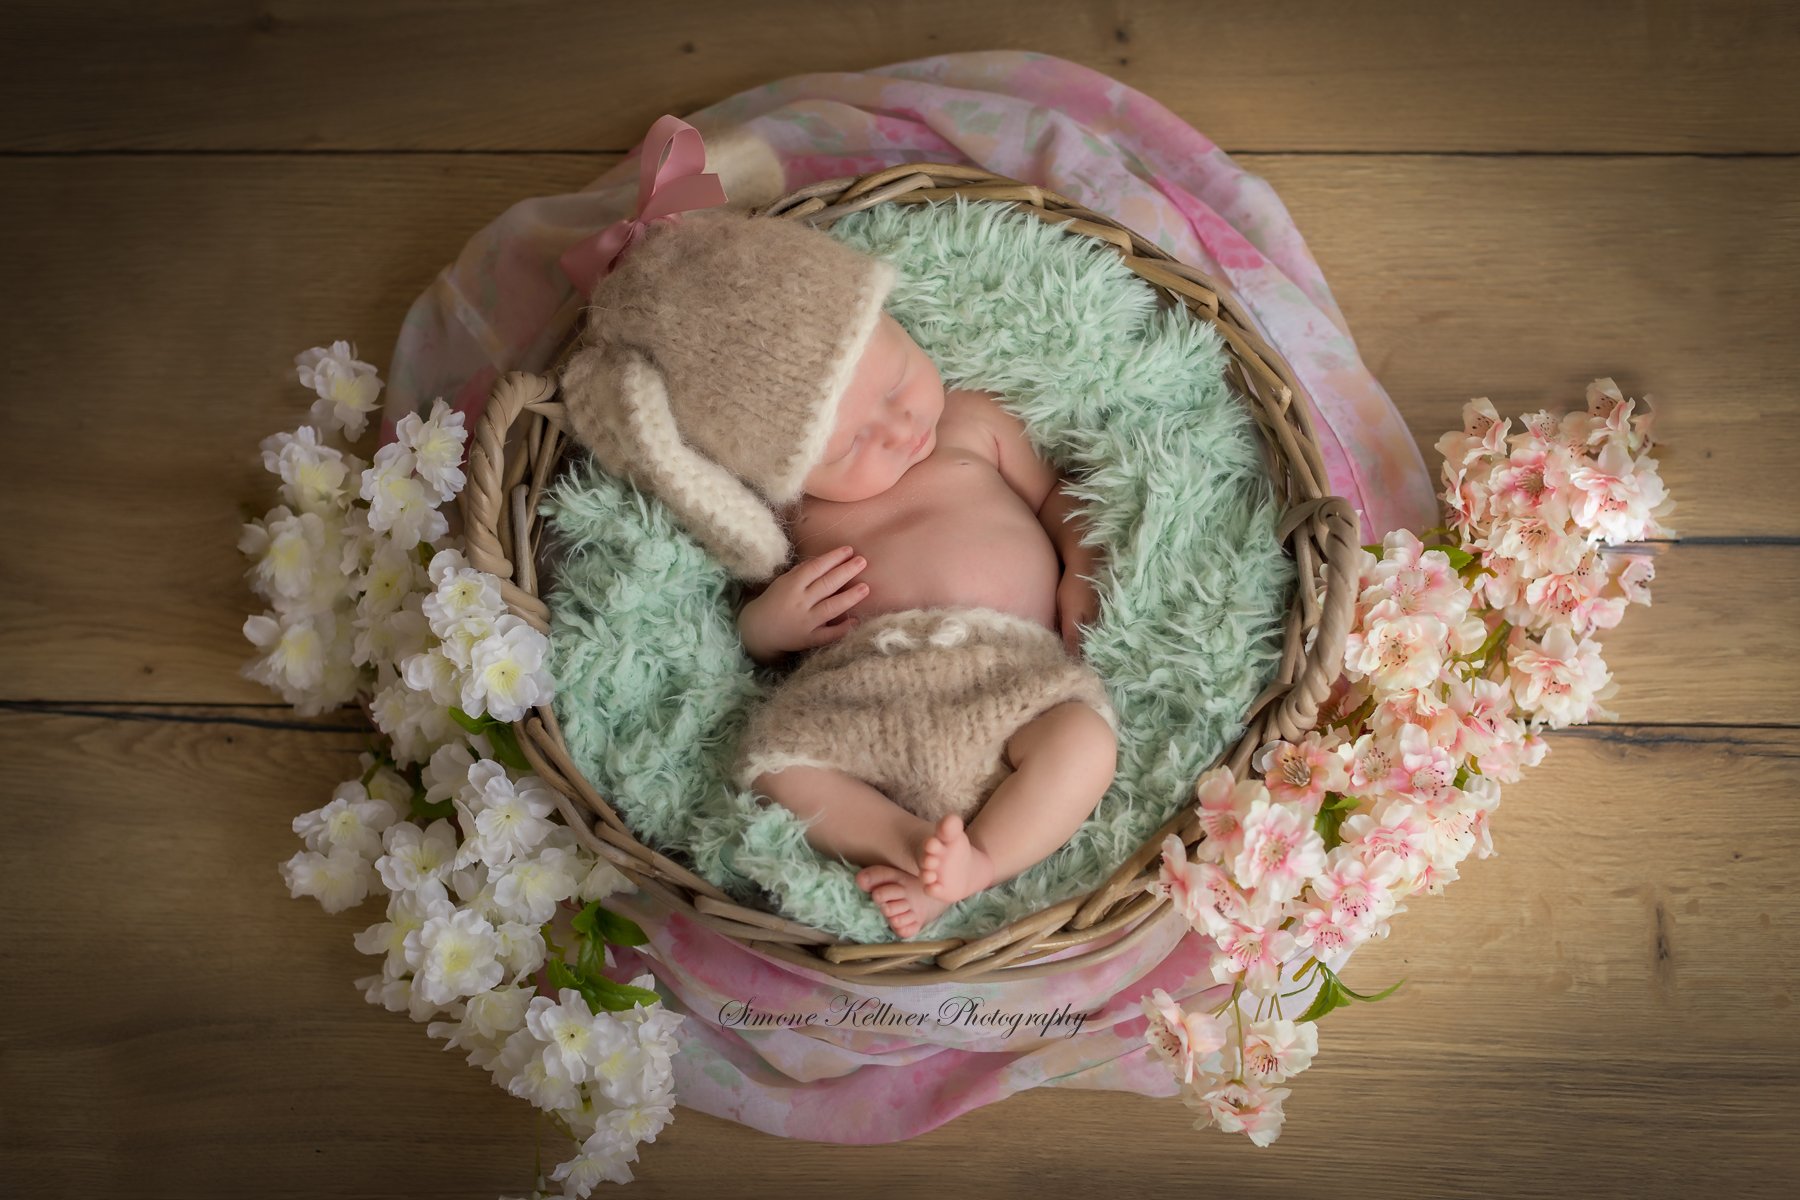 Kinderfotograf; Neugeborenenfotografie, Babyfotos, Babyfotograf, Neugeborenenbilder 